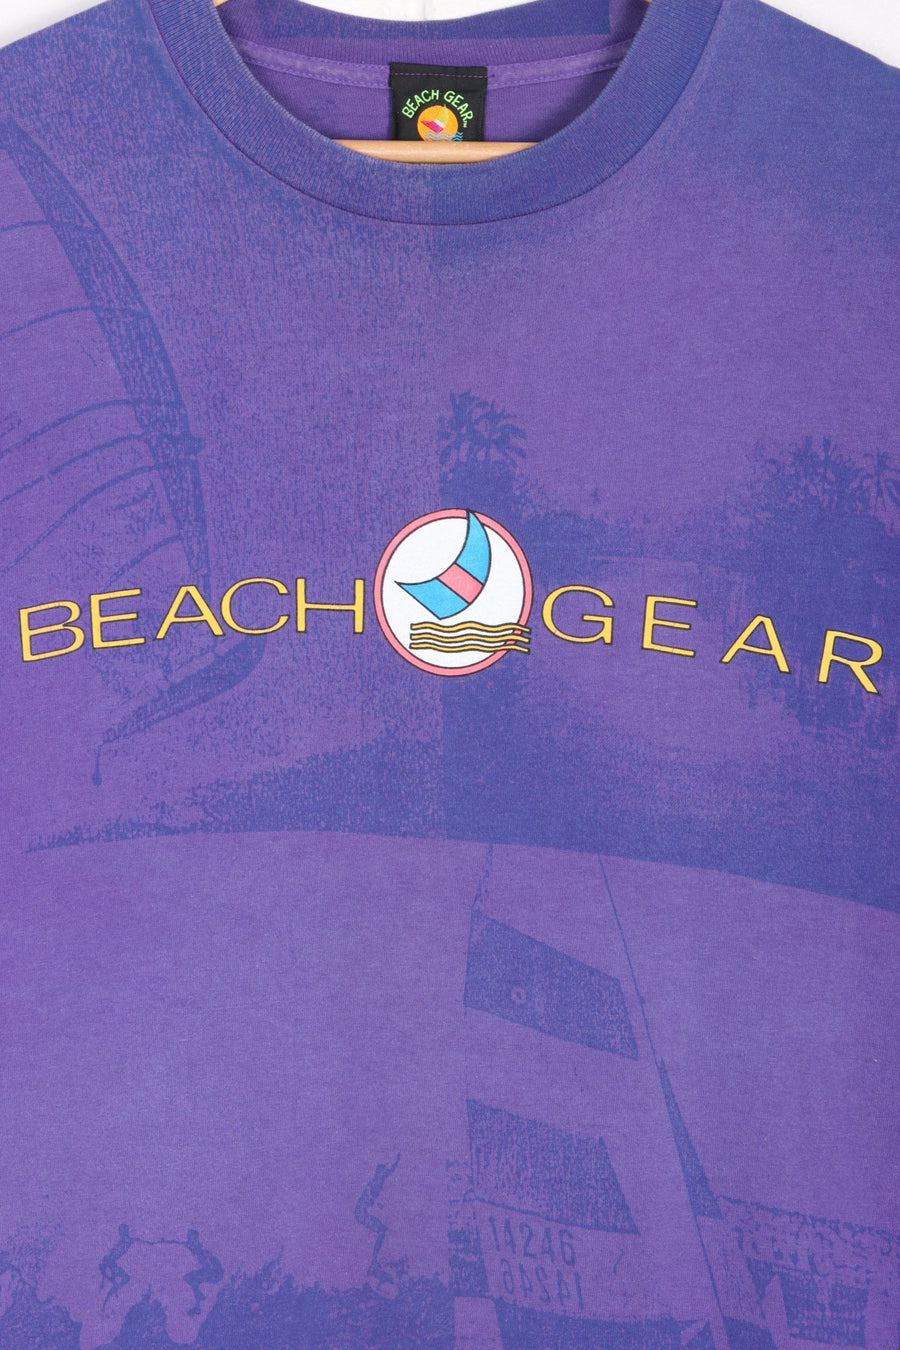 BEACH GEAR Windsurf Sailboat Surf All Over Single Stitch Tee USA Made (XL)